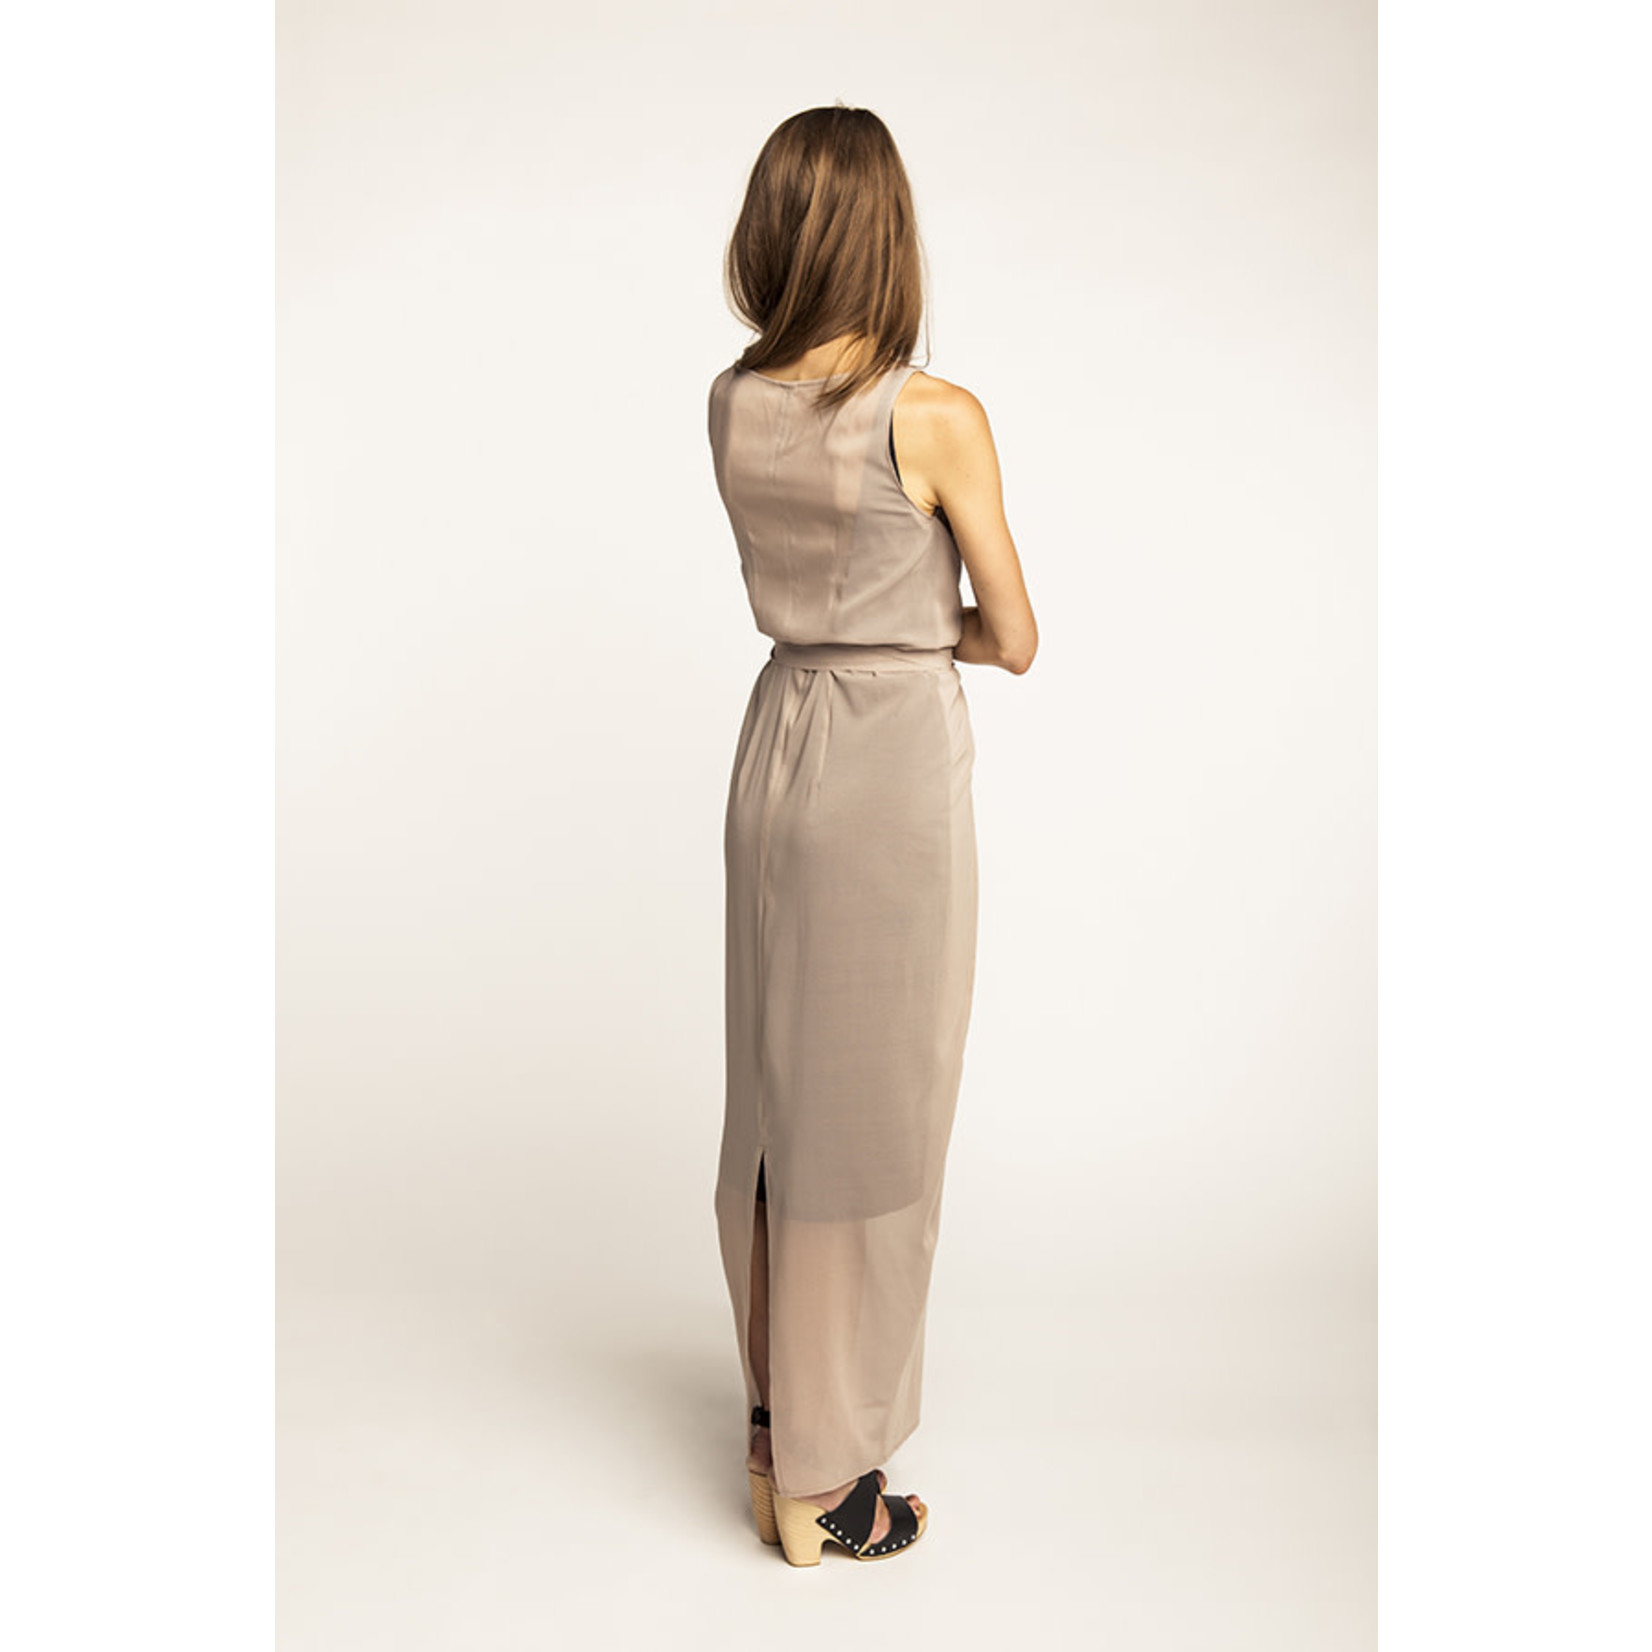 Named Clothing Kielo Wrap Dress Pattern 0-14